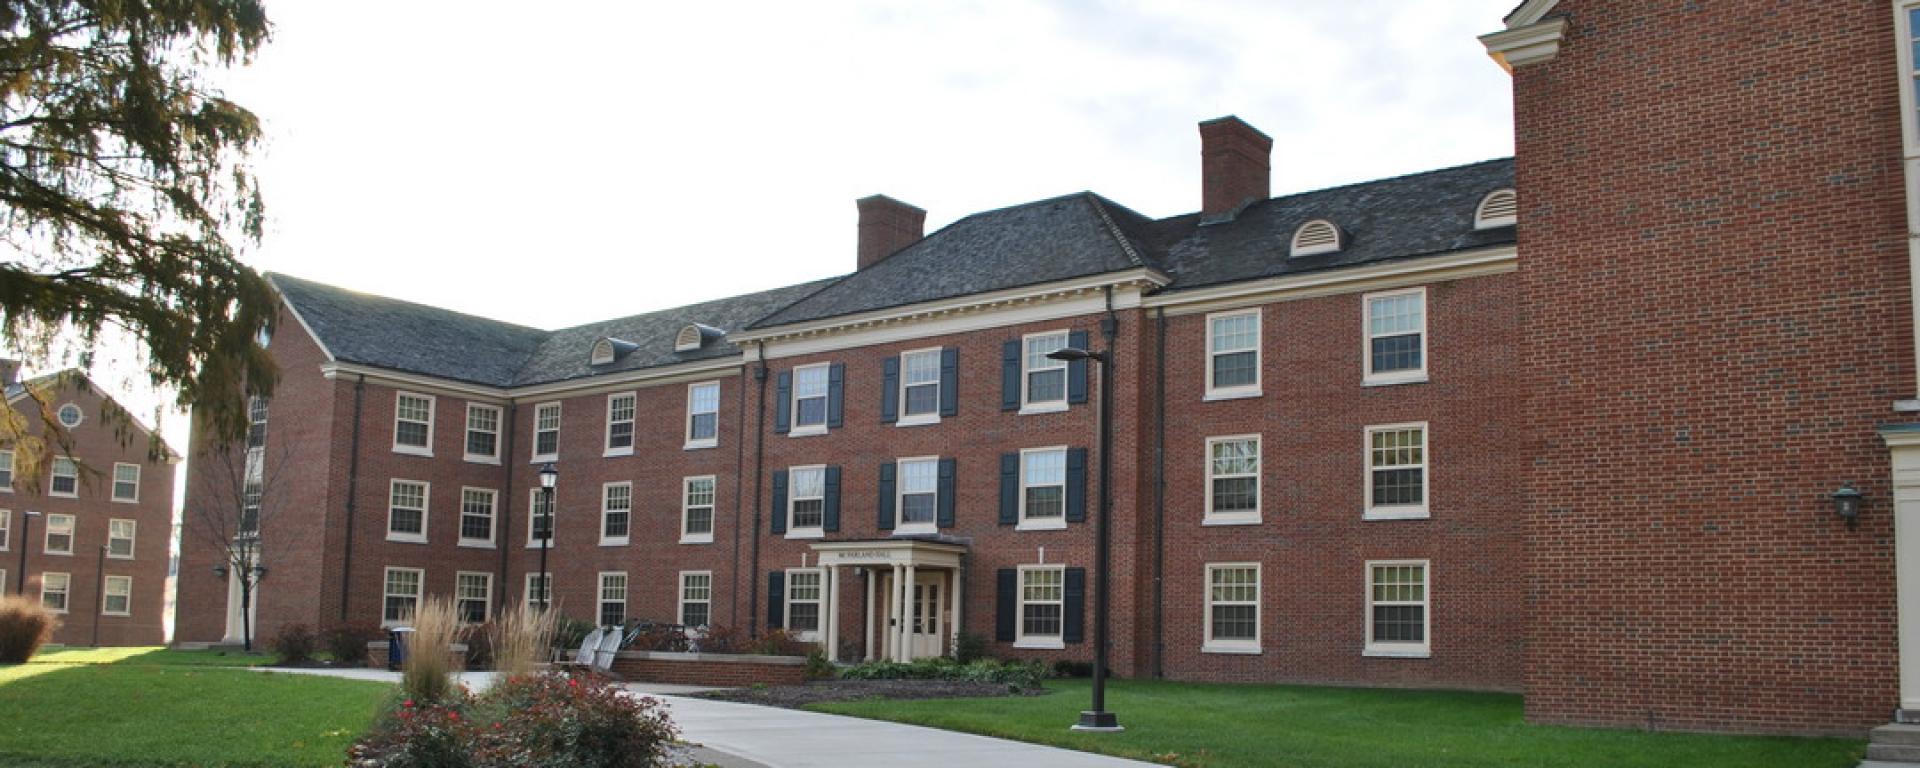 front profile of dorm buildings